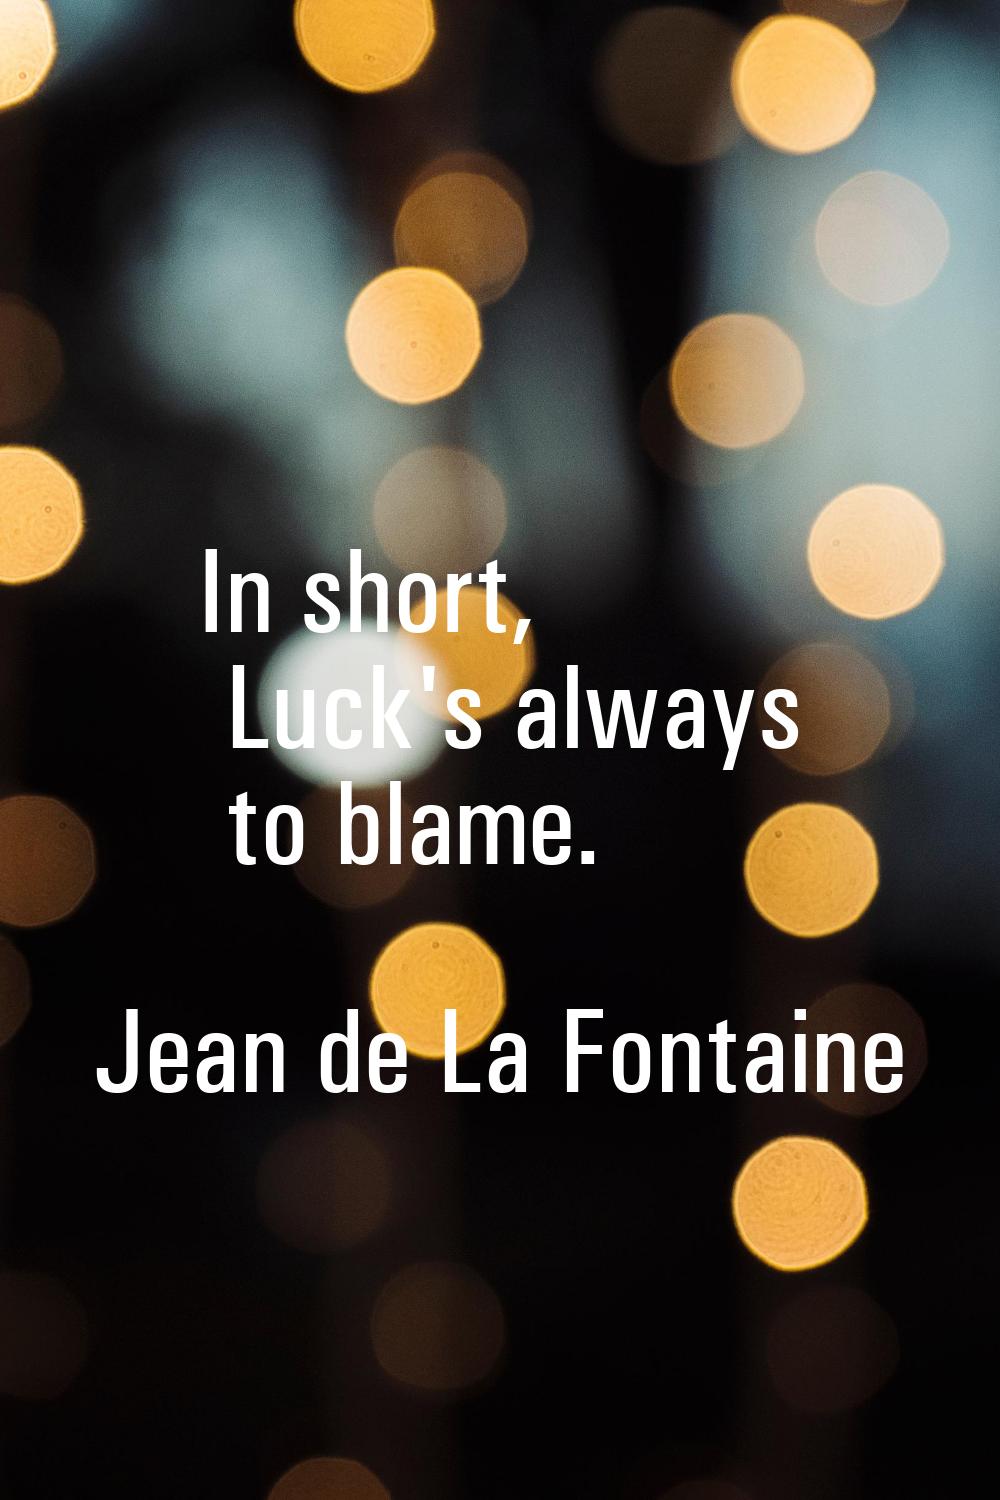 In short, Luck's always to blame.